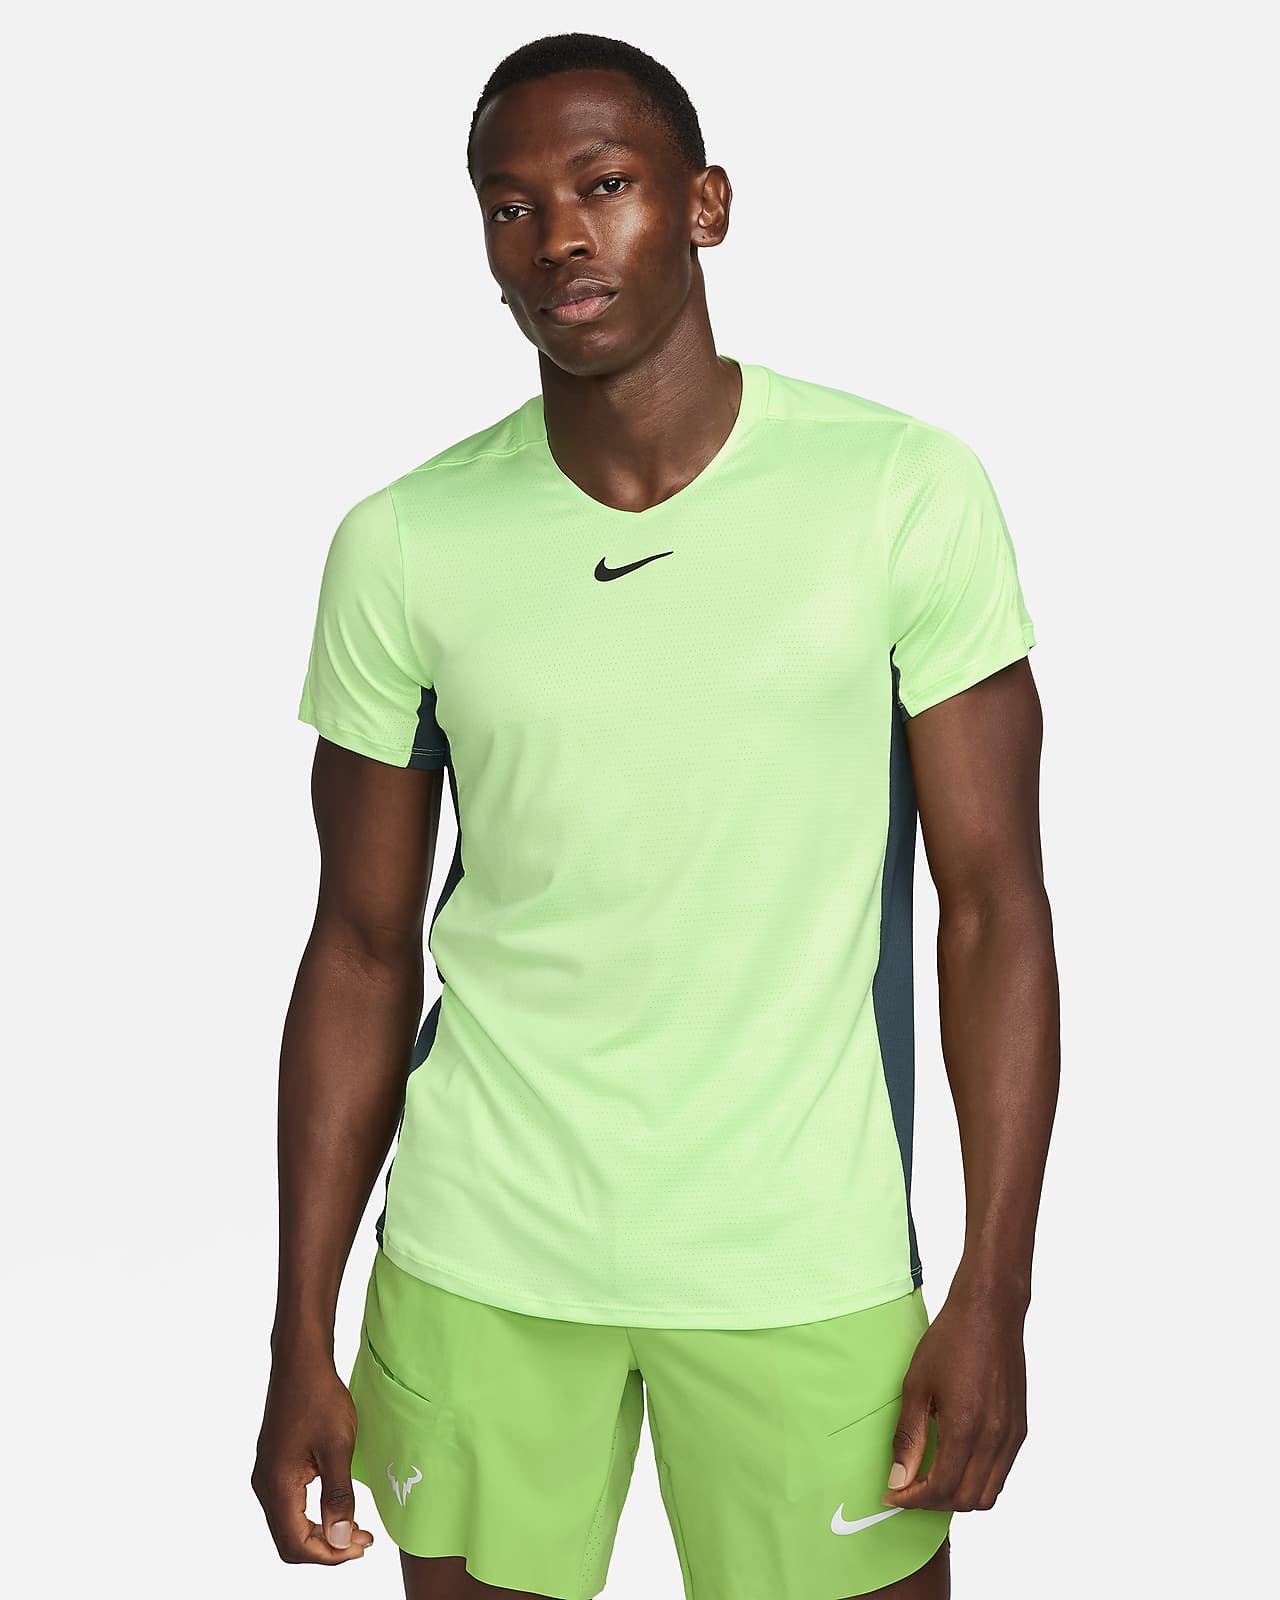 Nike Court Advantage Men's Tennis Pant White